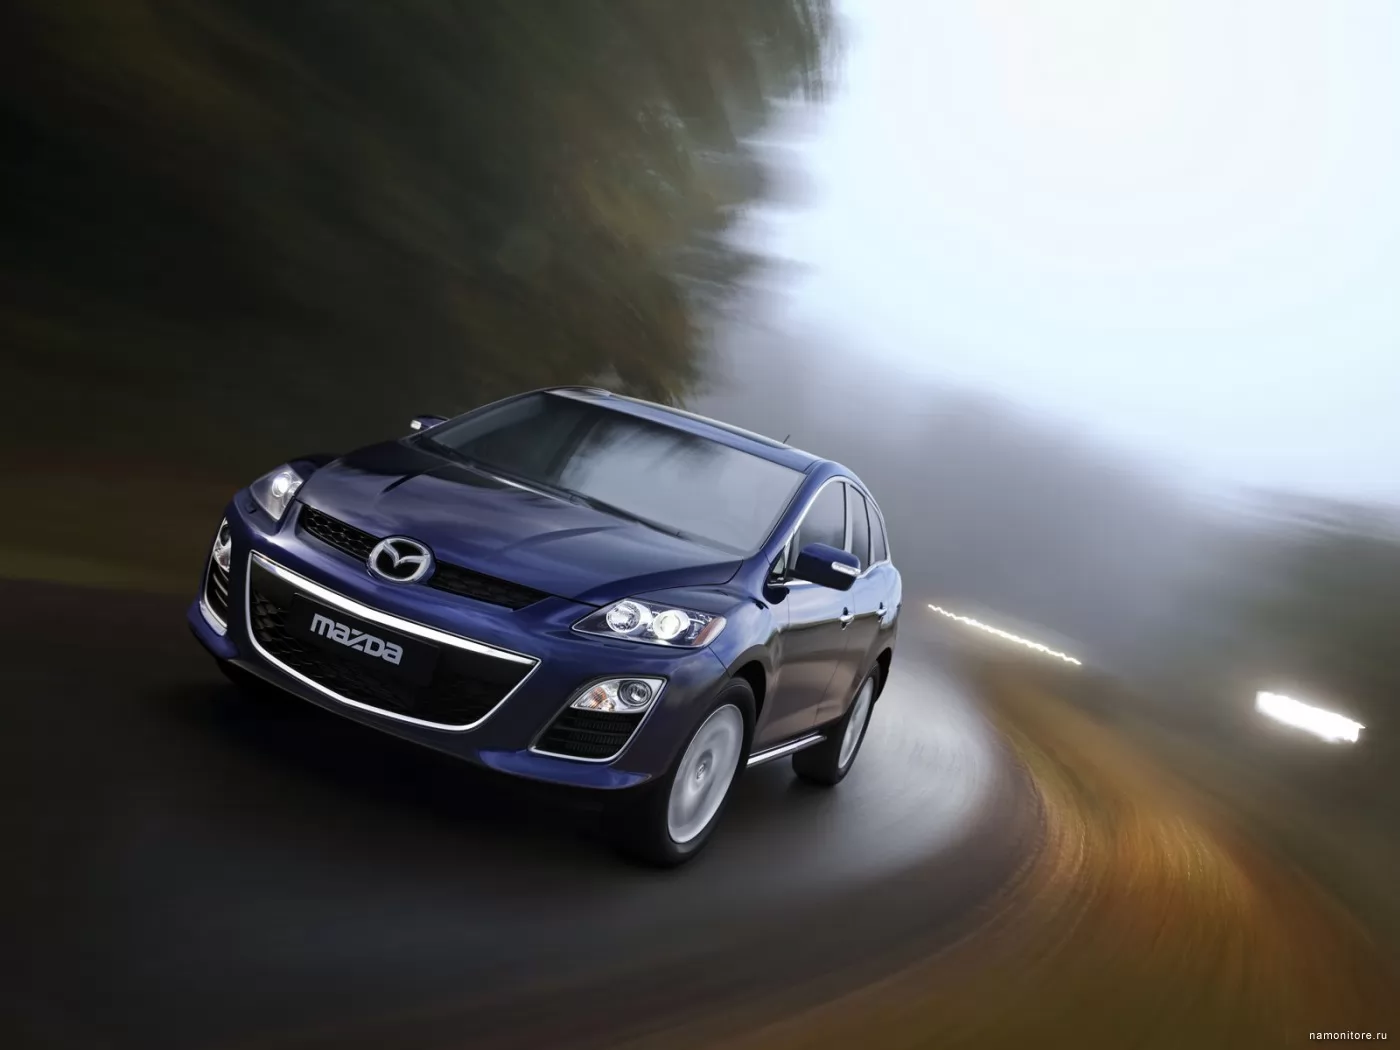 Mazda CX-7, cars, highway, Mazda, speed, technics x